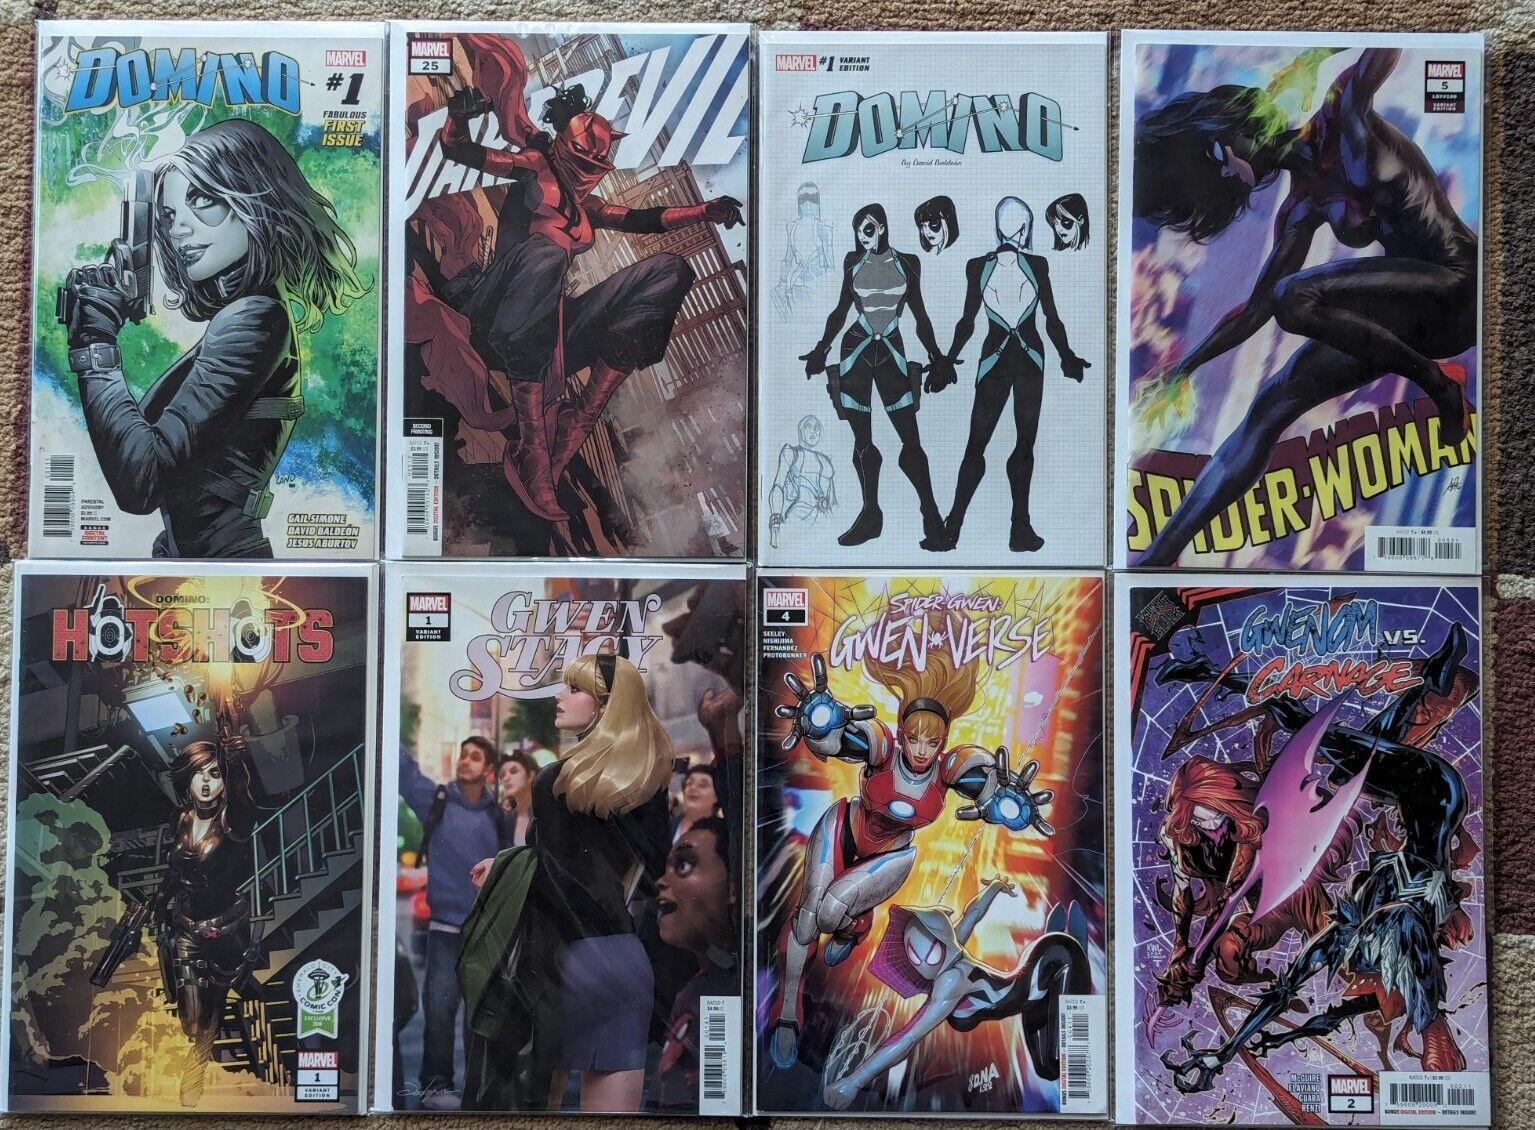 Domino #1, Gwen Stacy #1, Daredevil #25, Lot of 8 NM Marvel Comics, Spiderwoman